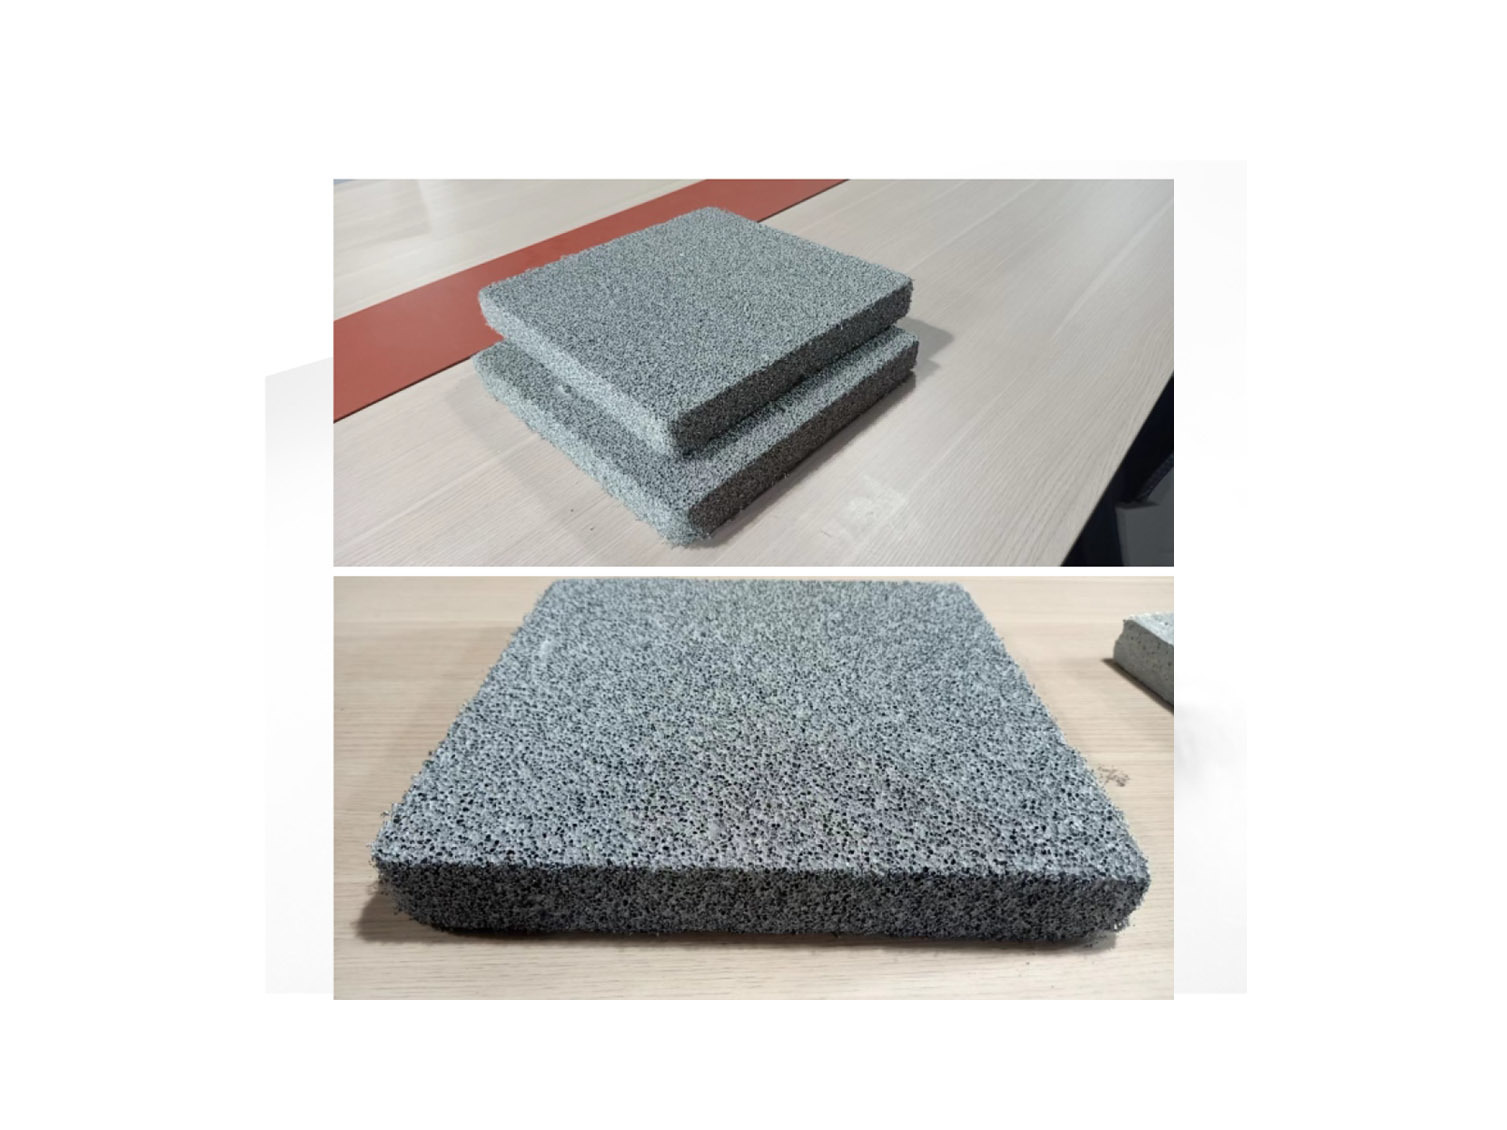 Foam cement insulation board